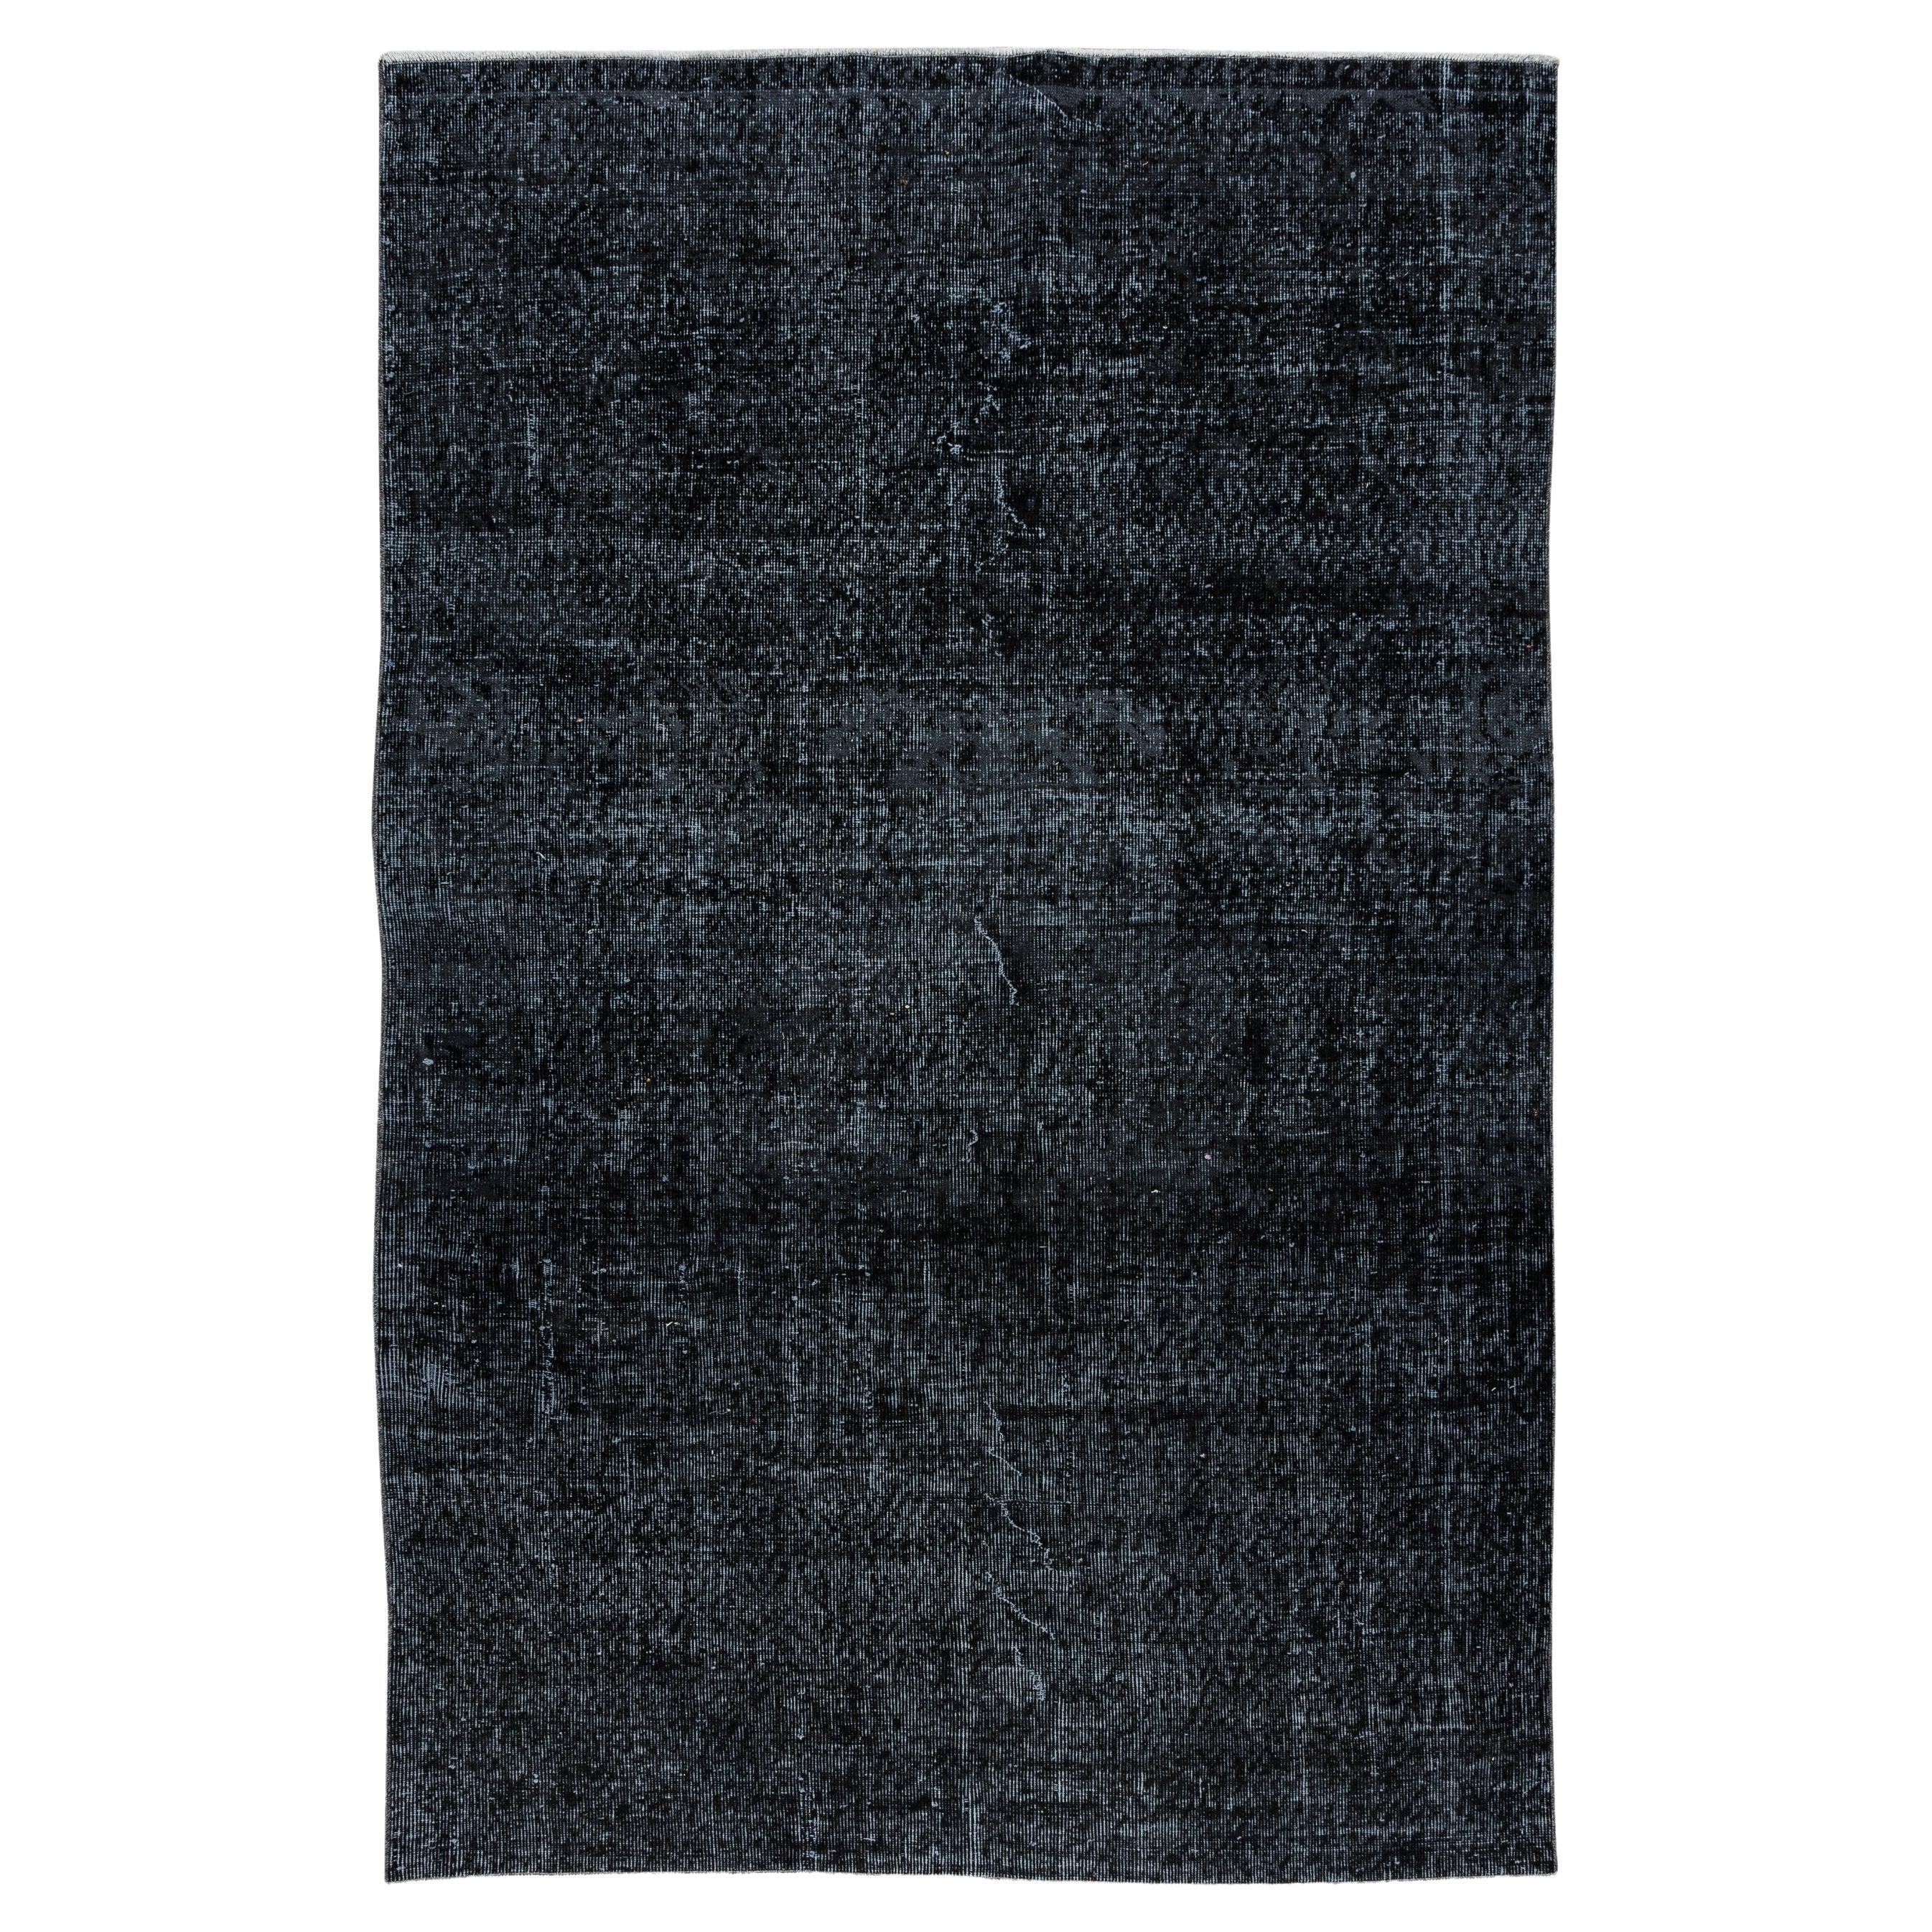 5.4x8.3 Ft Contemporary Turkish Plain Black Area Rug, Handknotted Vintage Carpet For Sale